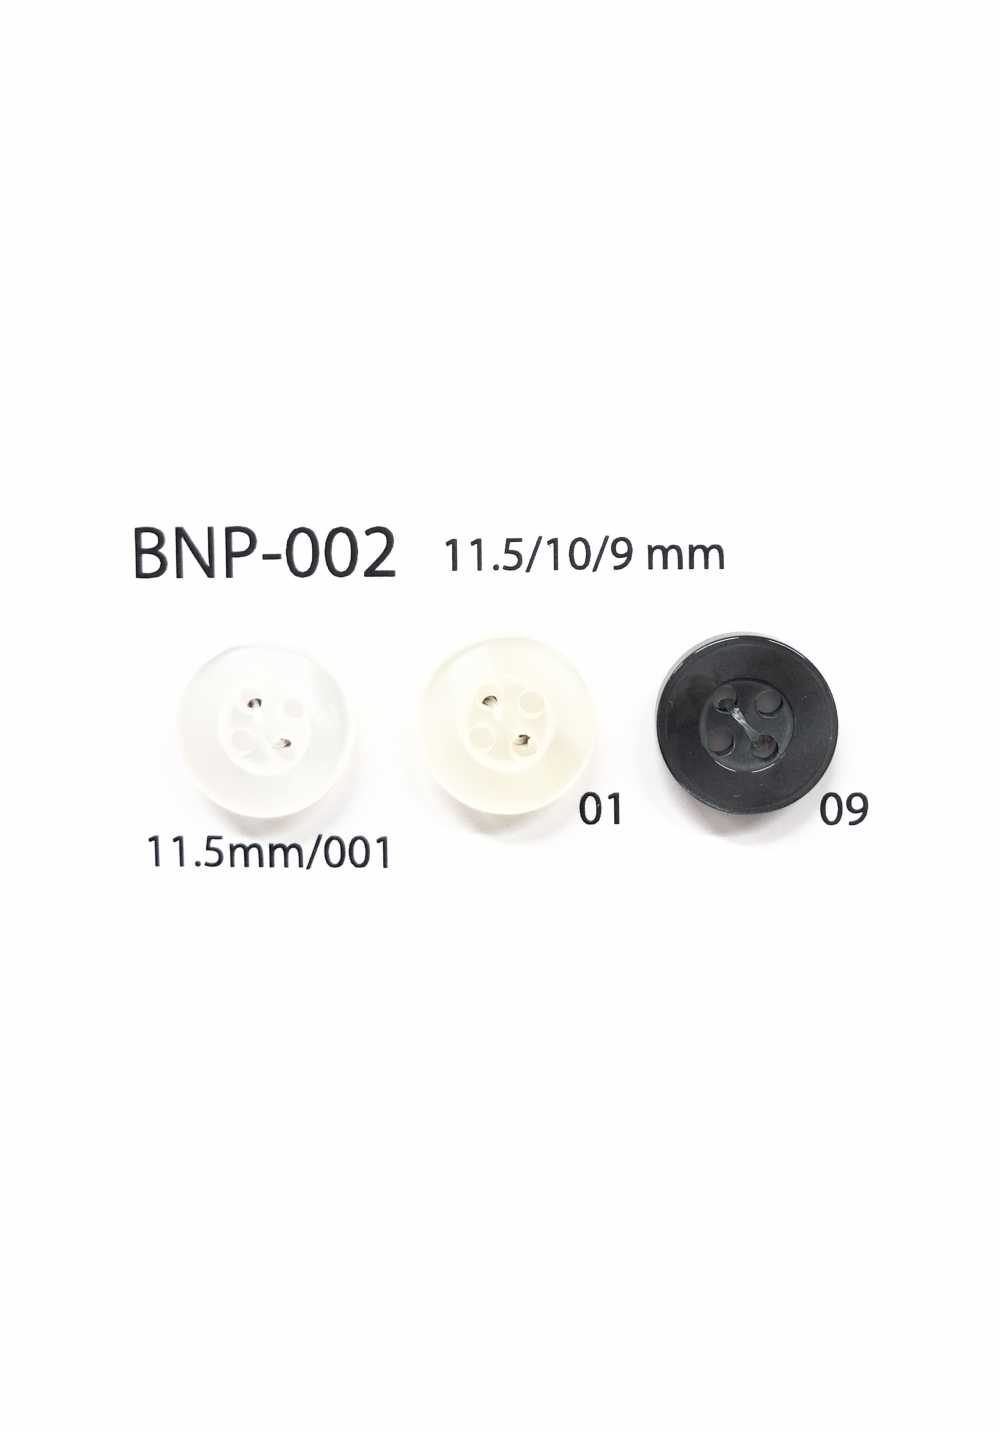 BNP-002 Cúc 4 Lỗ Biopolyester IRIS